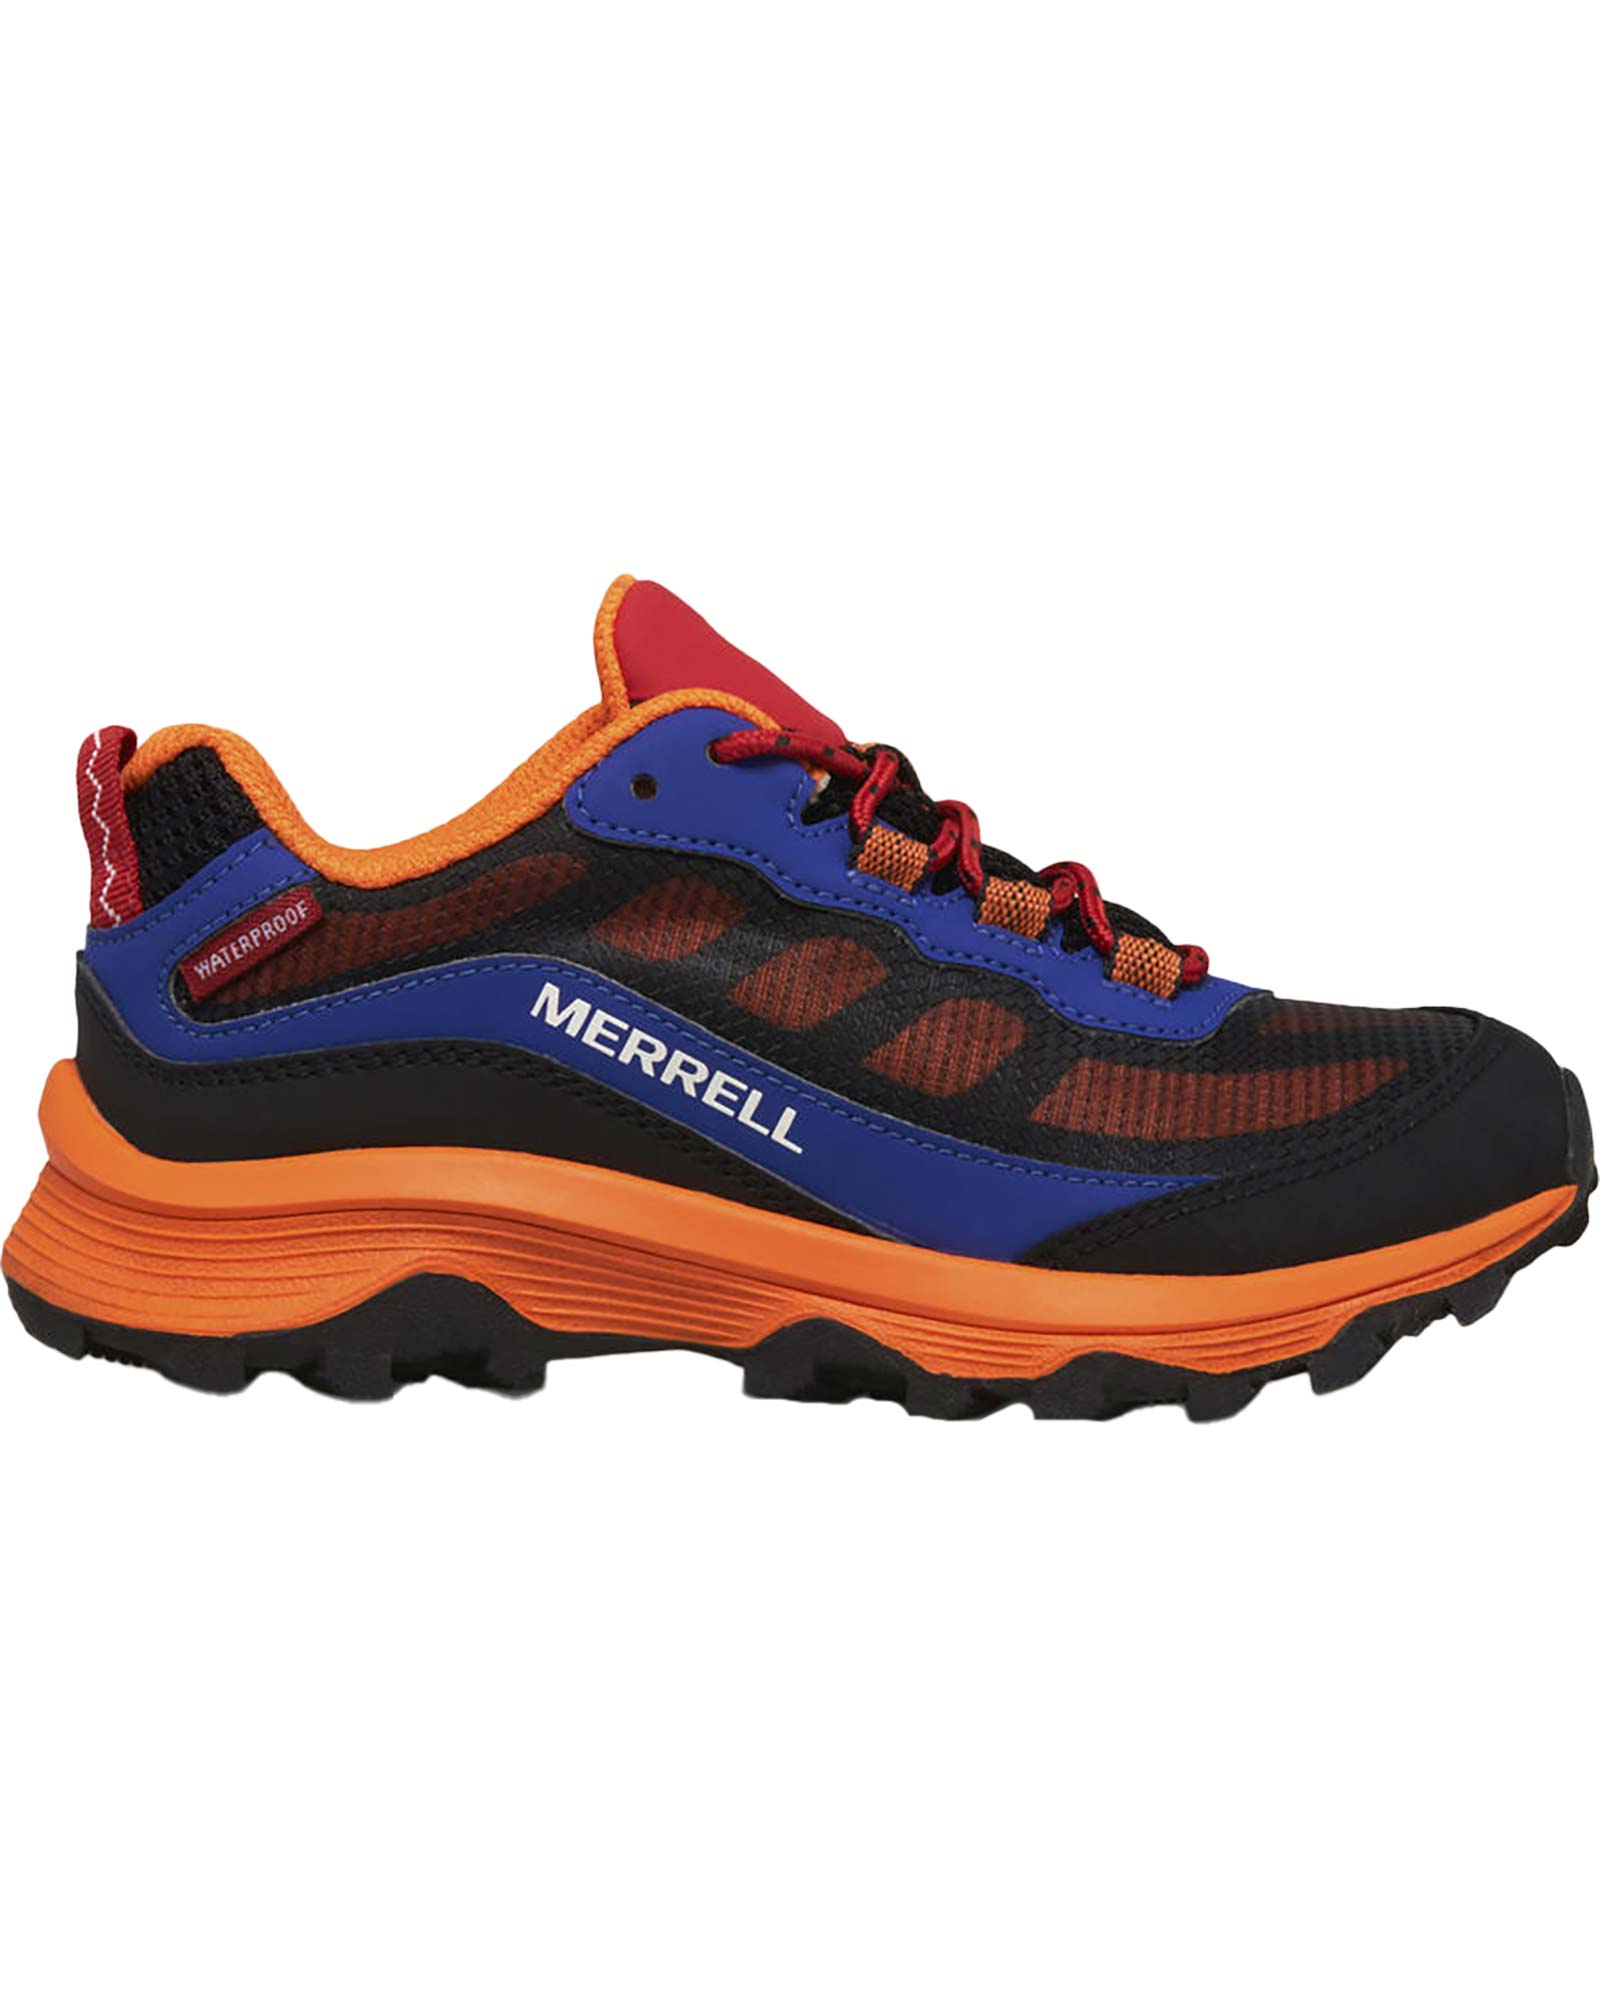 Merrell Moab Speed Laces Kids’ Waterproof Shoes - Blue/Black/Orange UK 5